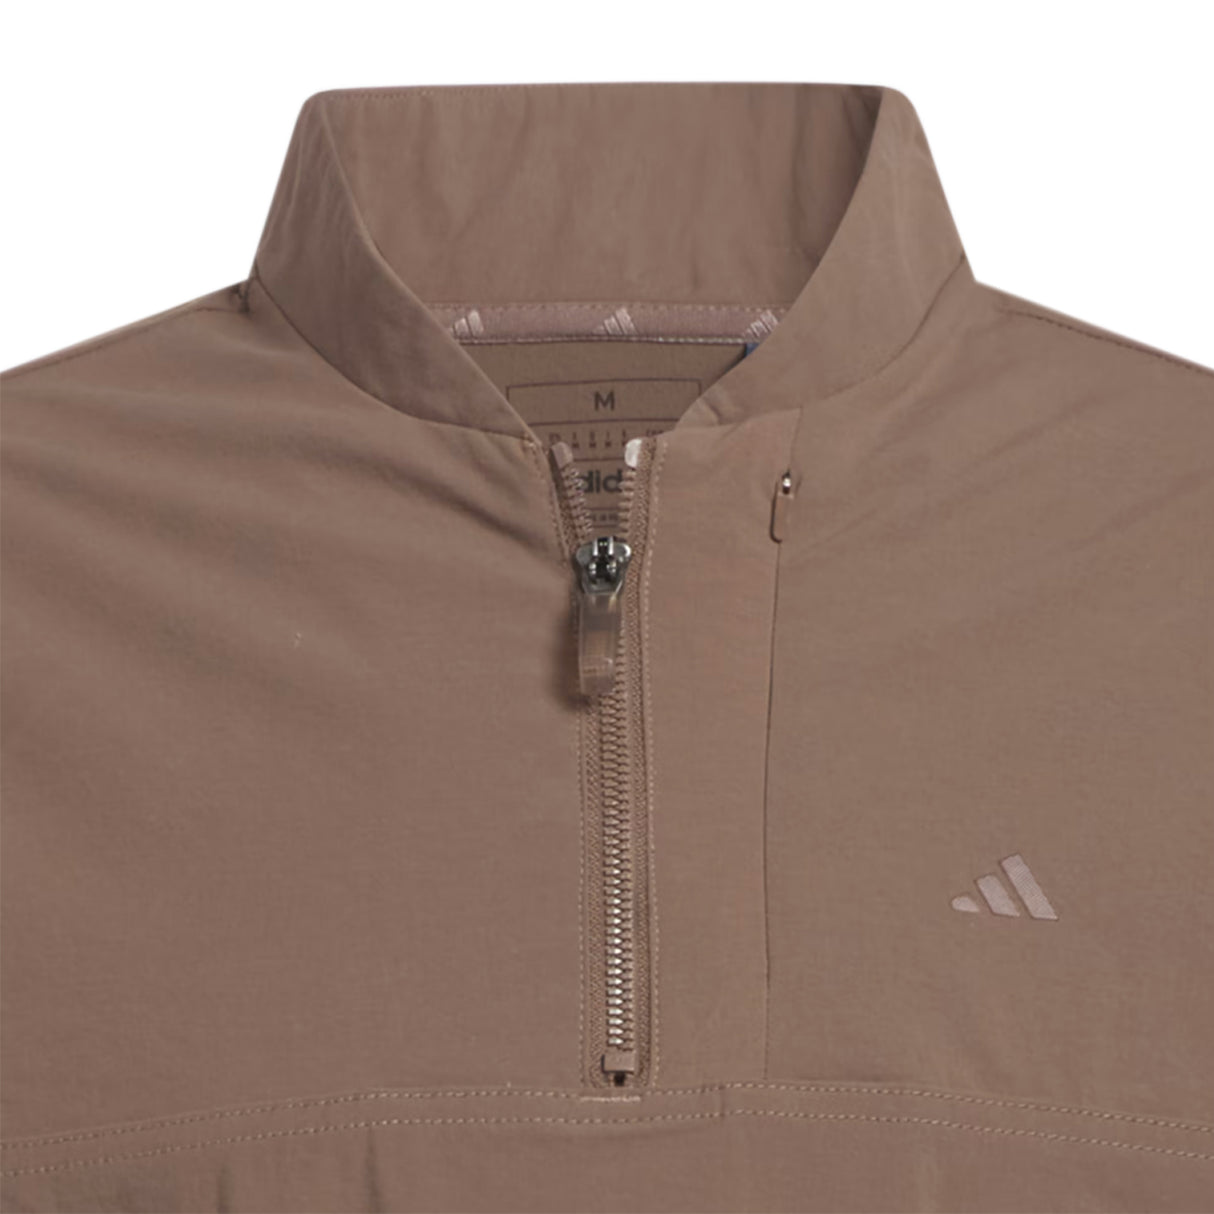 Adidas Golf Ultimate365 Tour Stretch Quarter-Zip Pullover